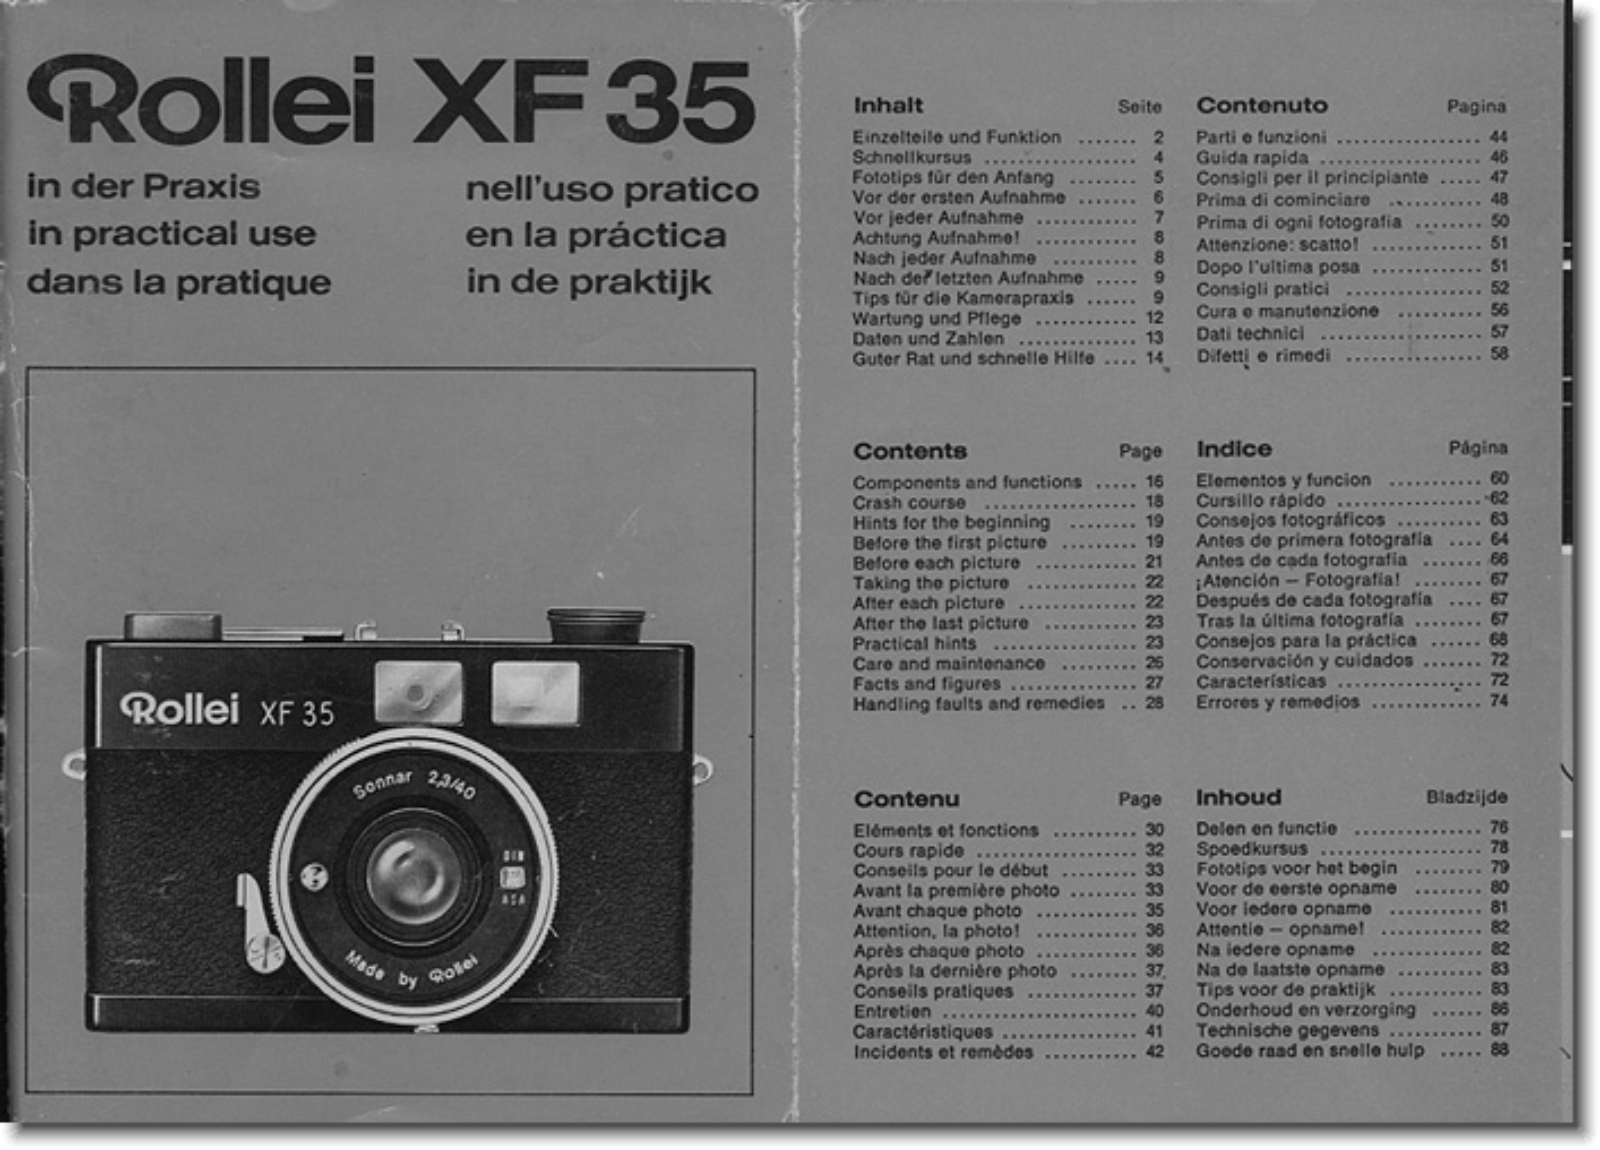 Rollei XF-35 Practical Use Manual